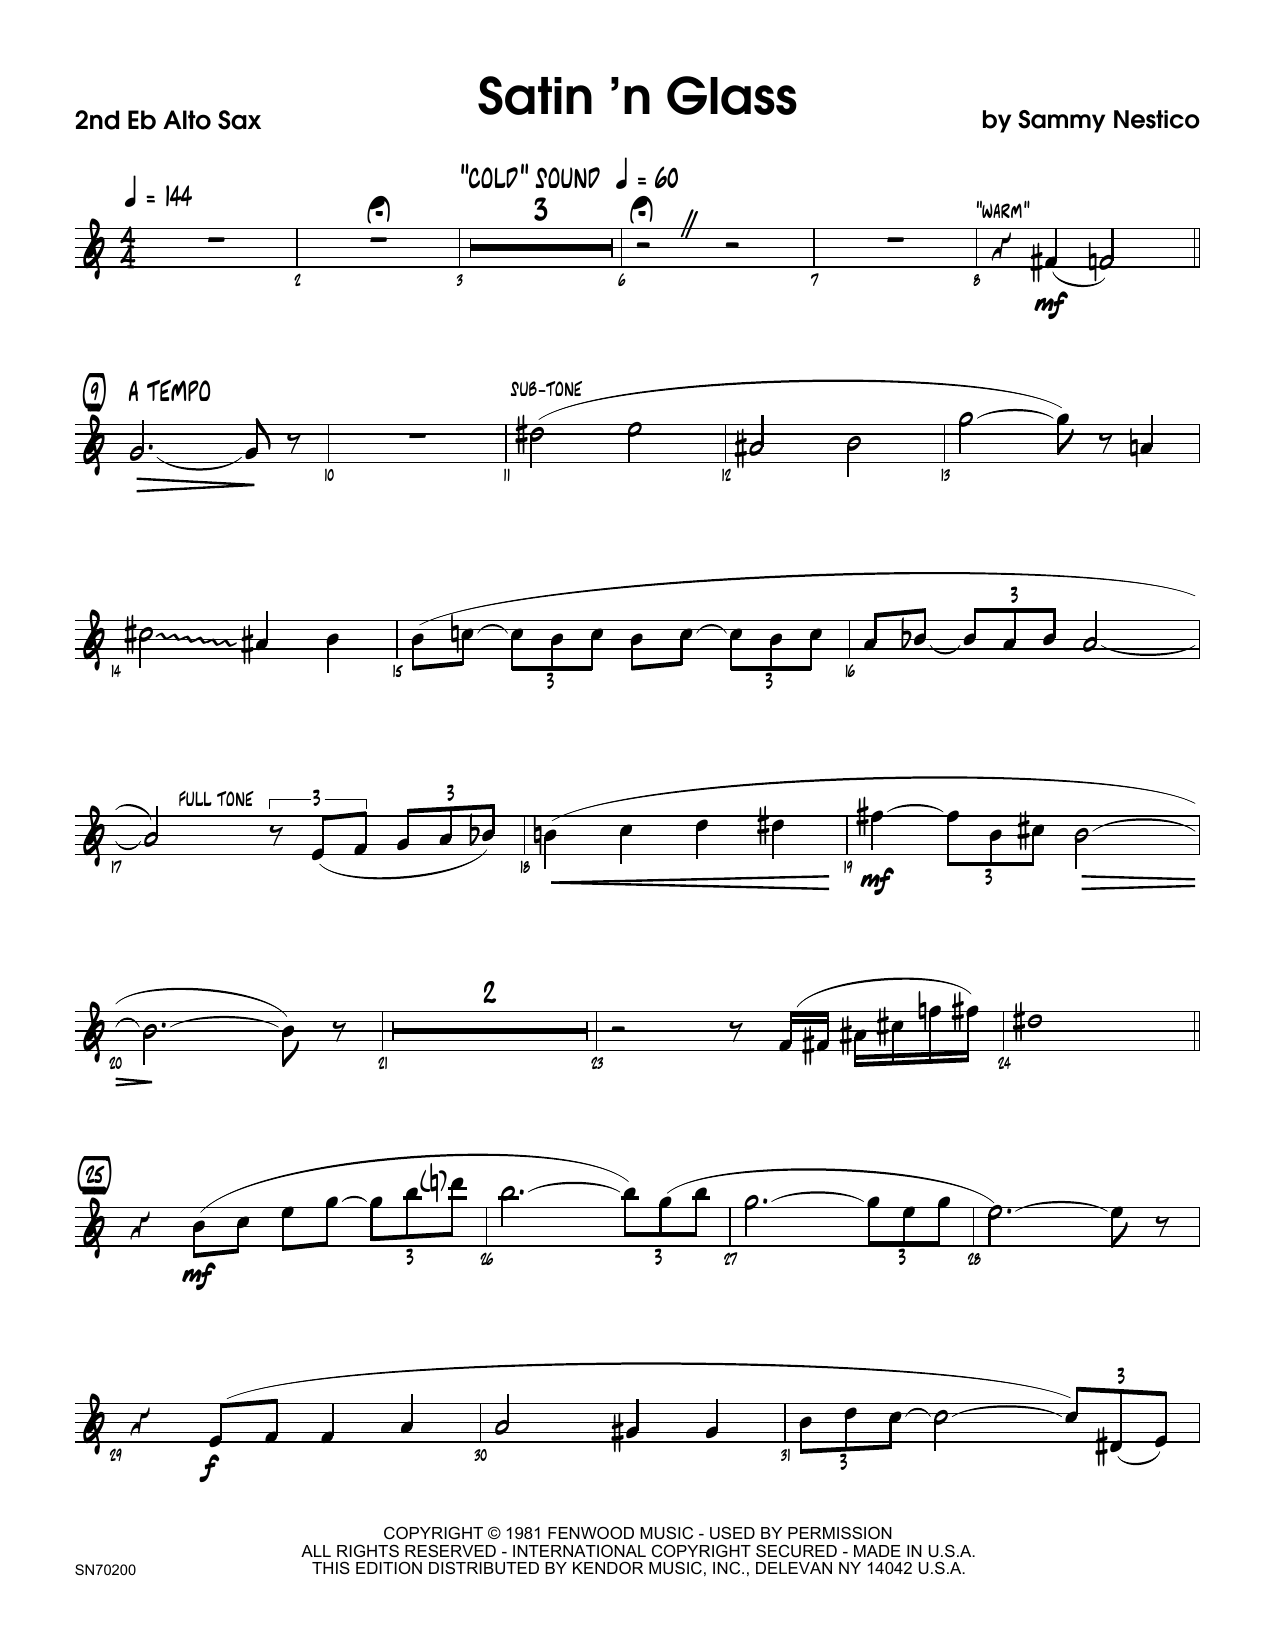 Download Sammy Nestico Satin 'n Glass - 2nd Eb Alto Saxophone Sheet Music